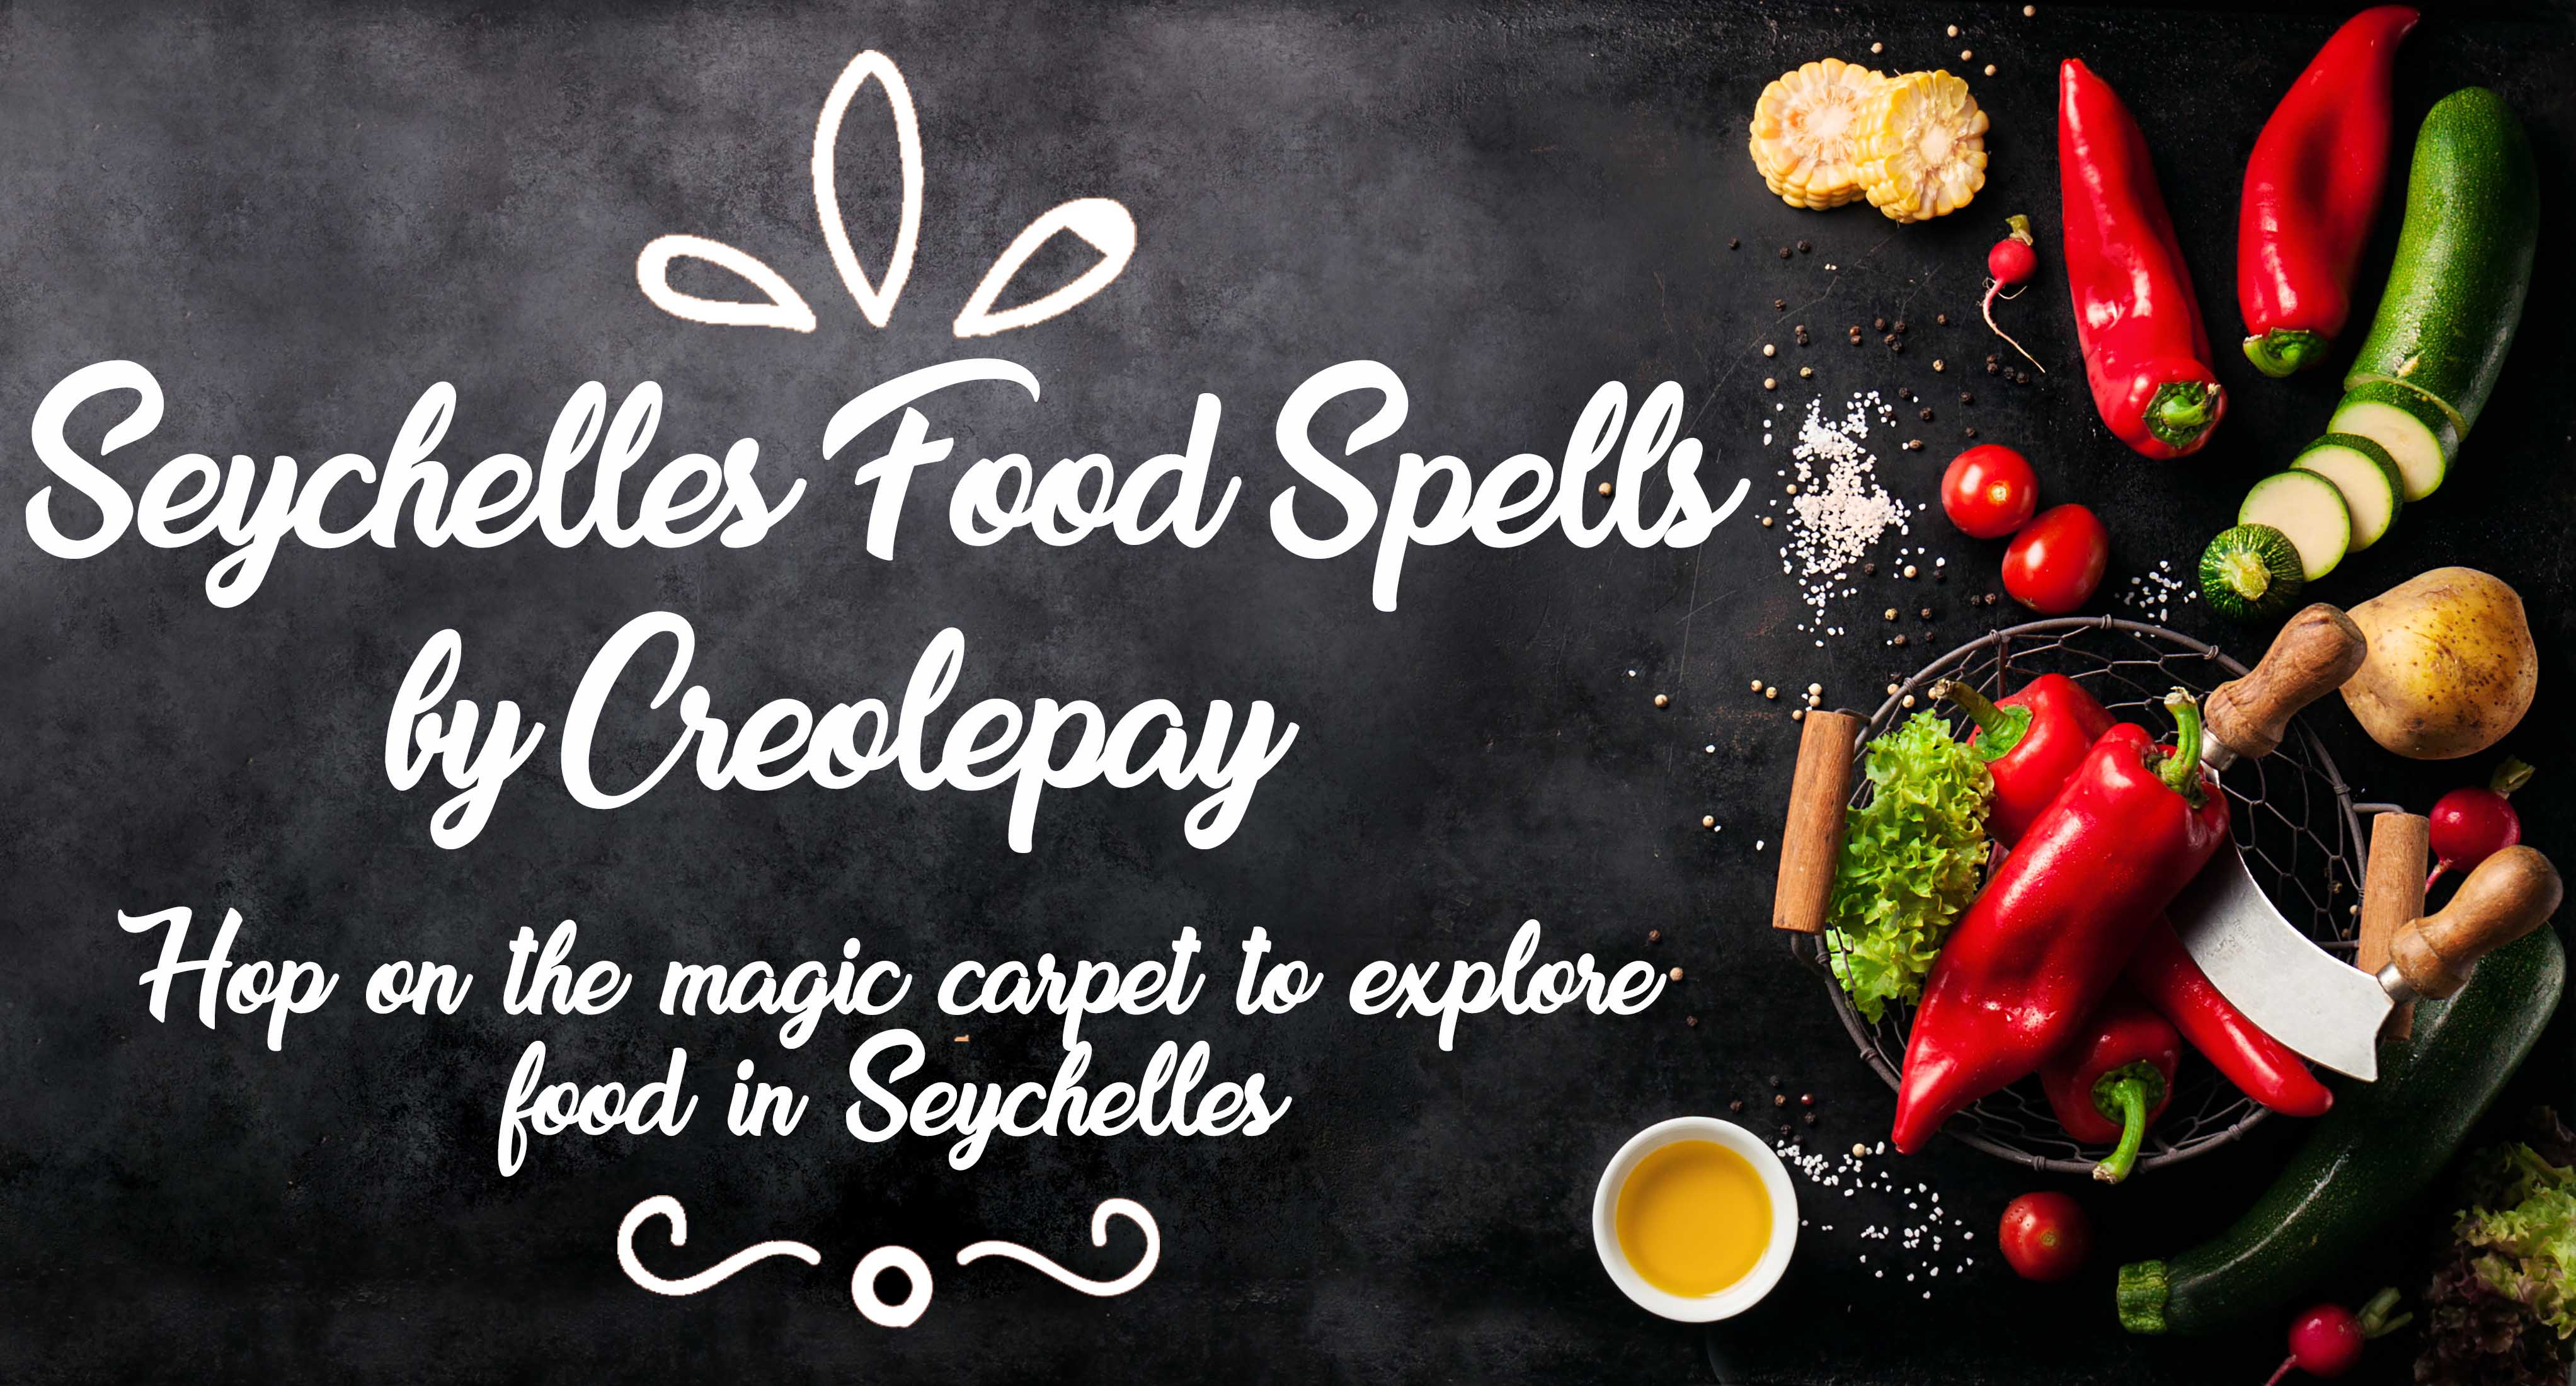 Food Spells Creolepay